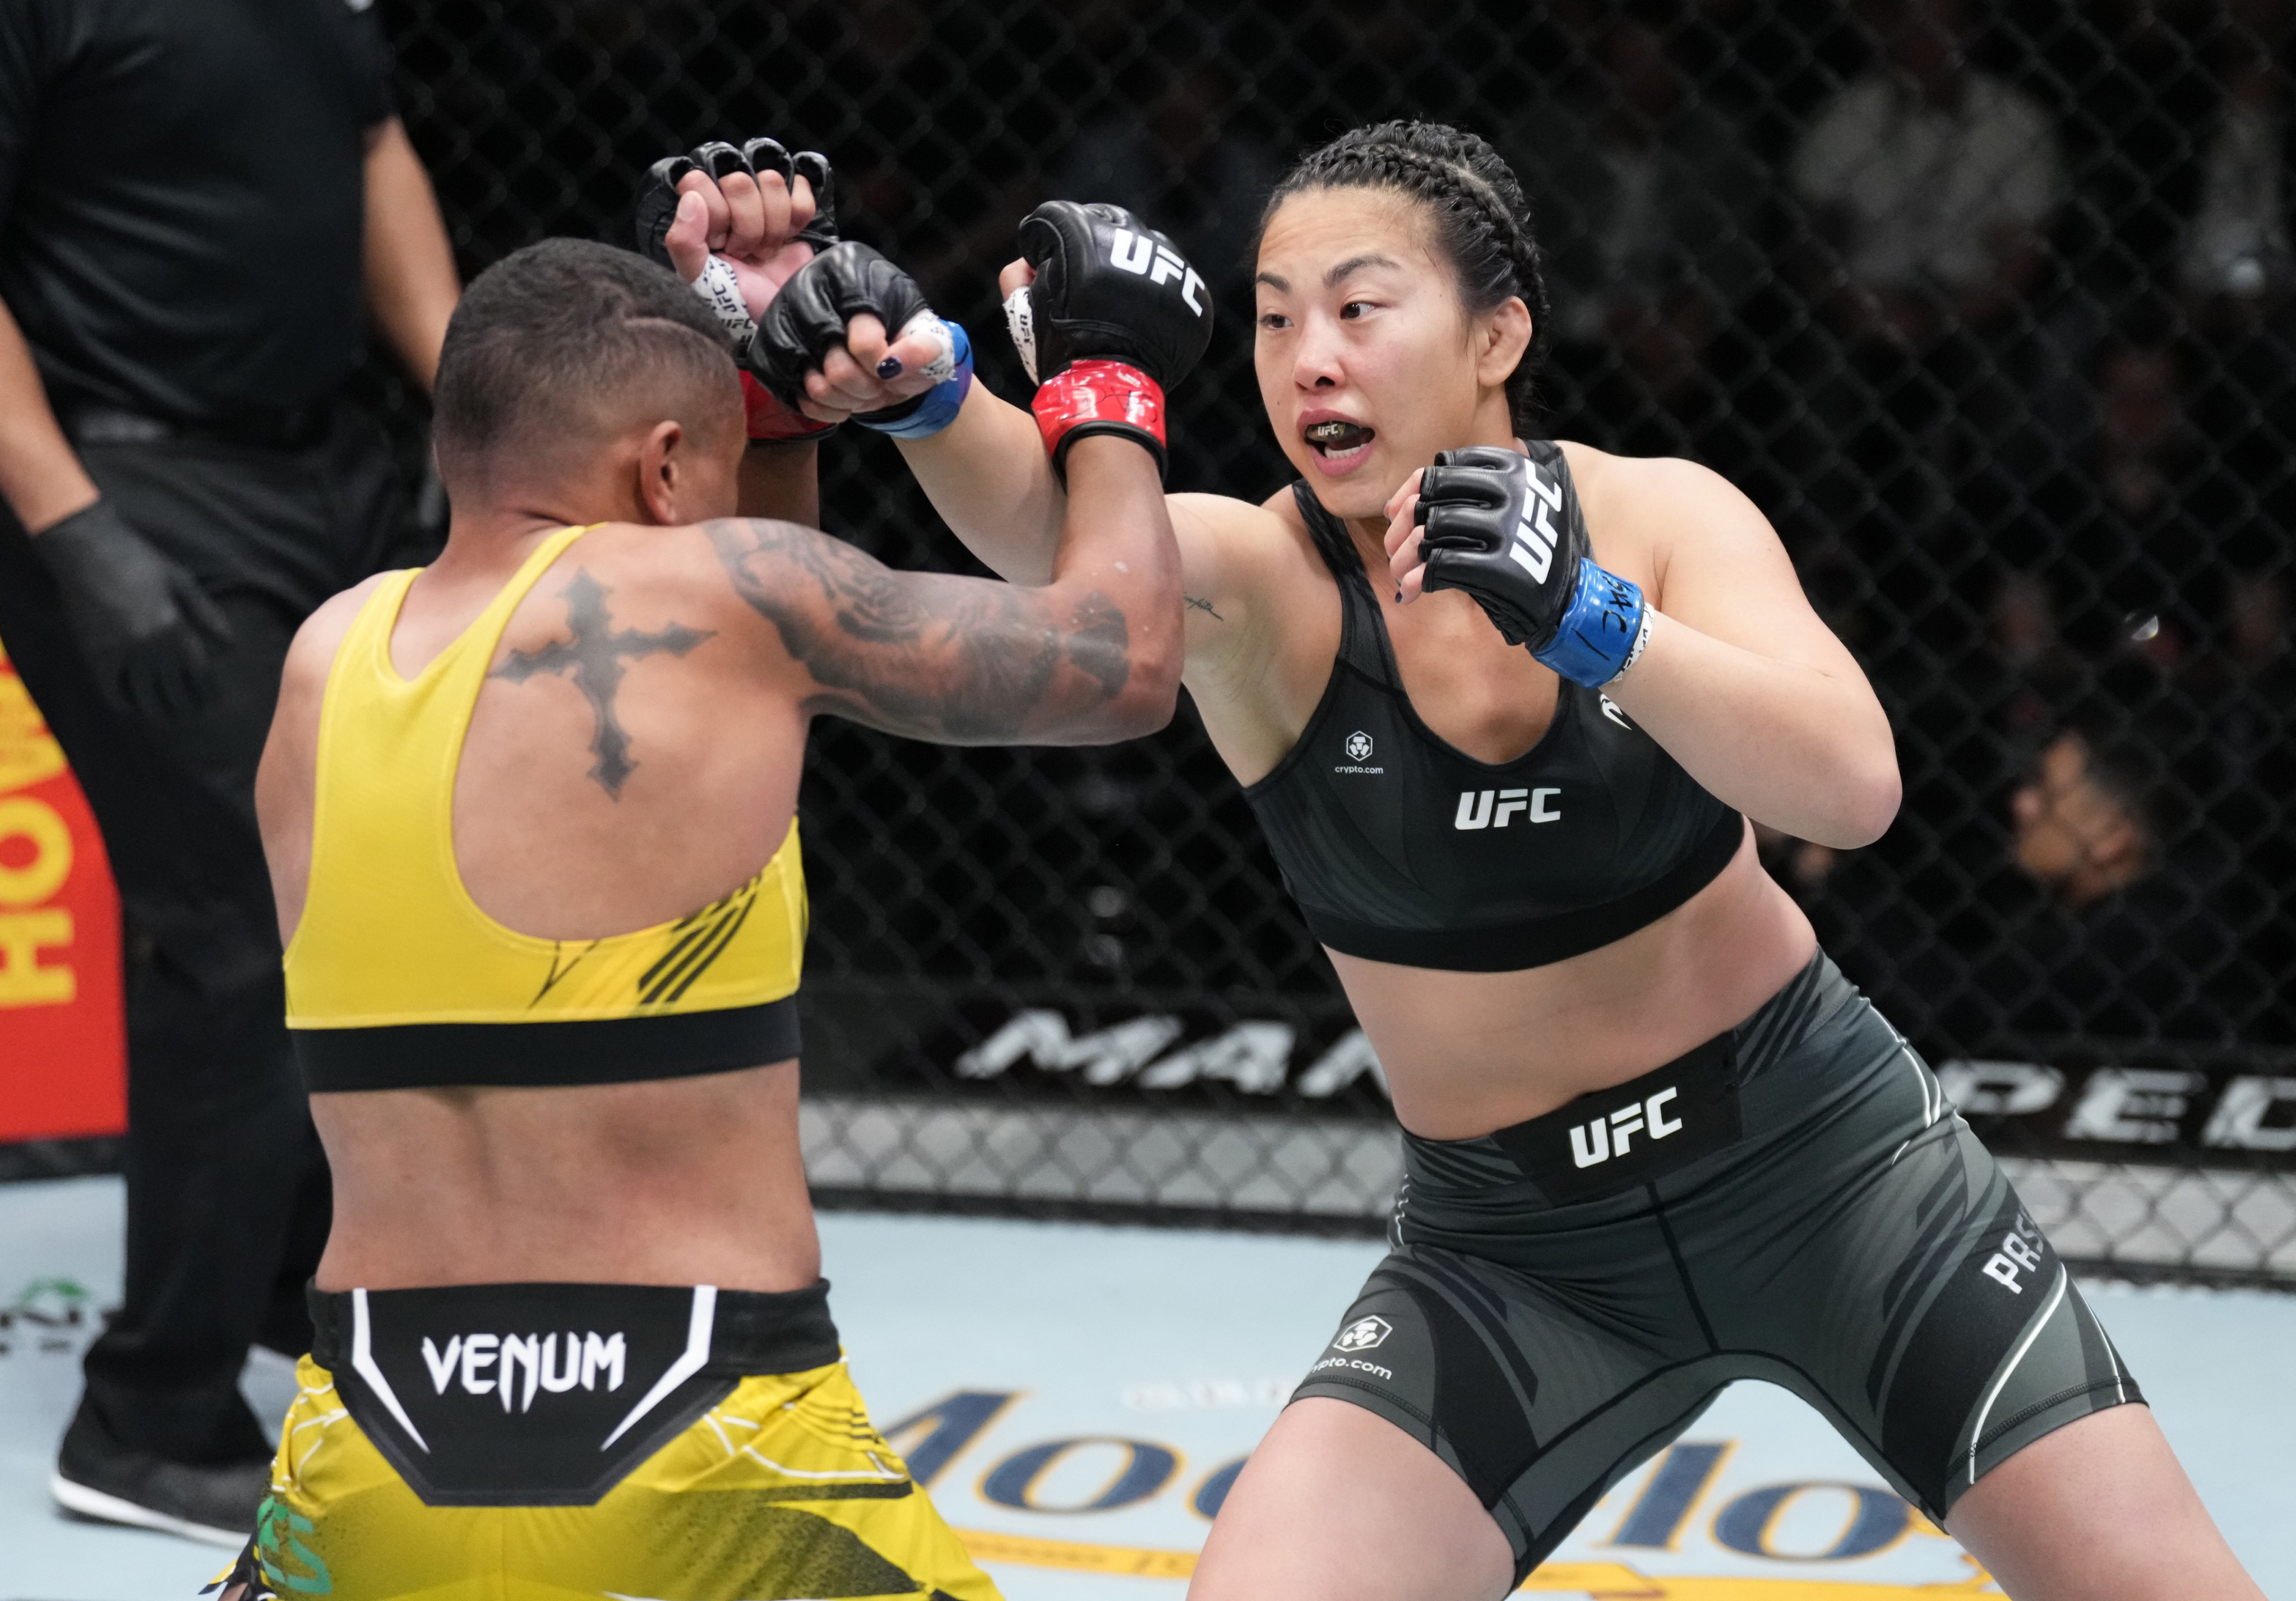 Ramona Pascual (right) punches Josiane Nunes during UFC Fight Night in Las Vegas. Photo: Zuffa LLC